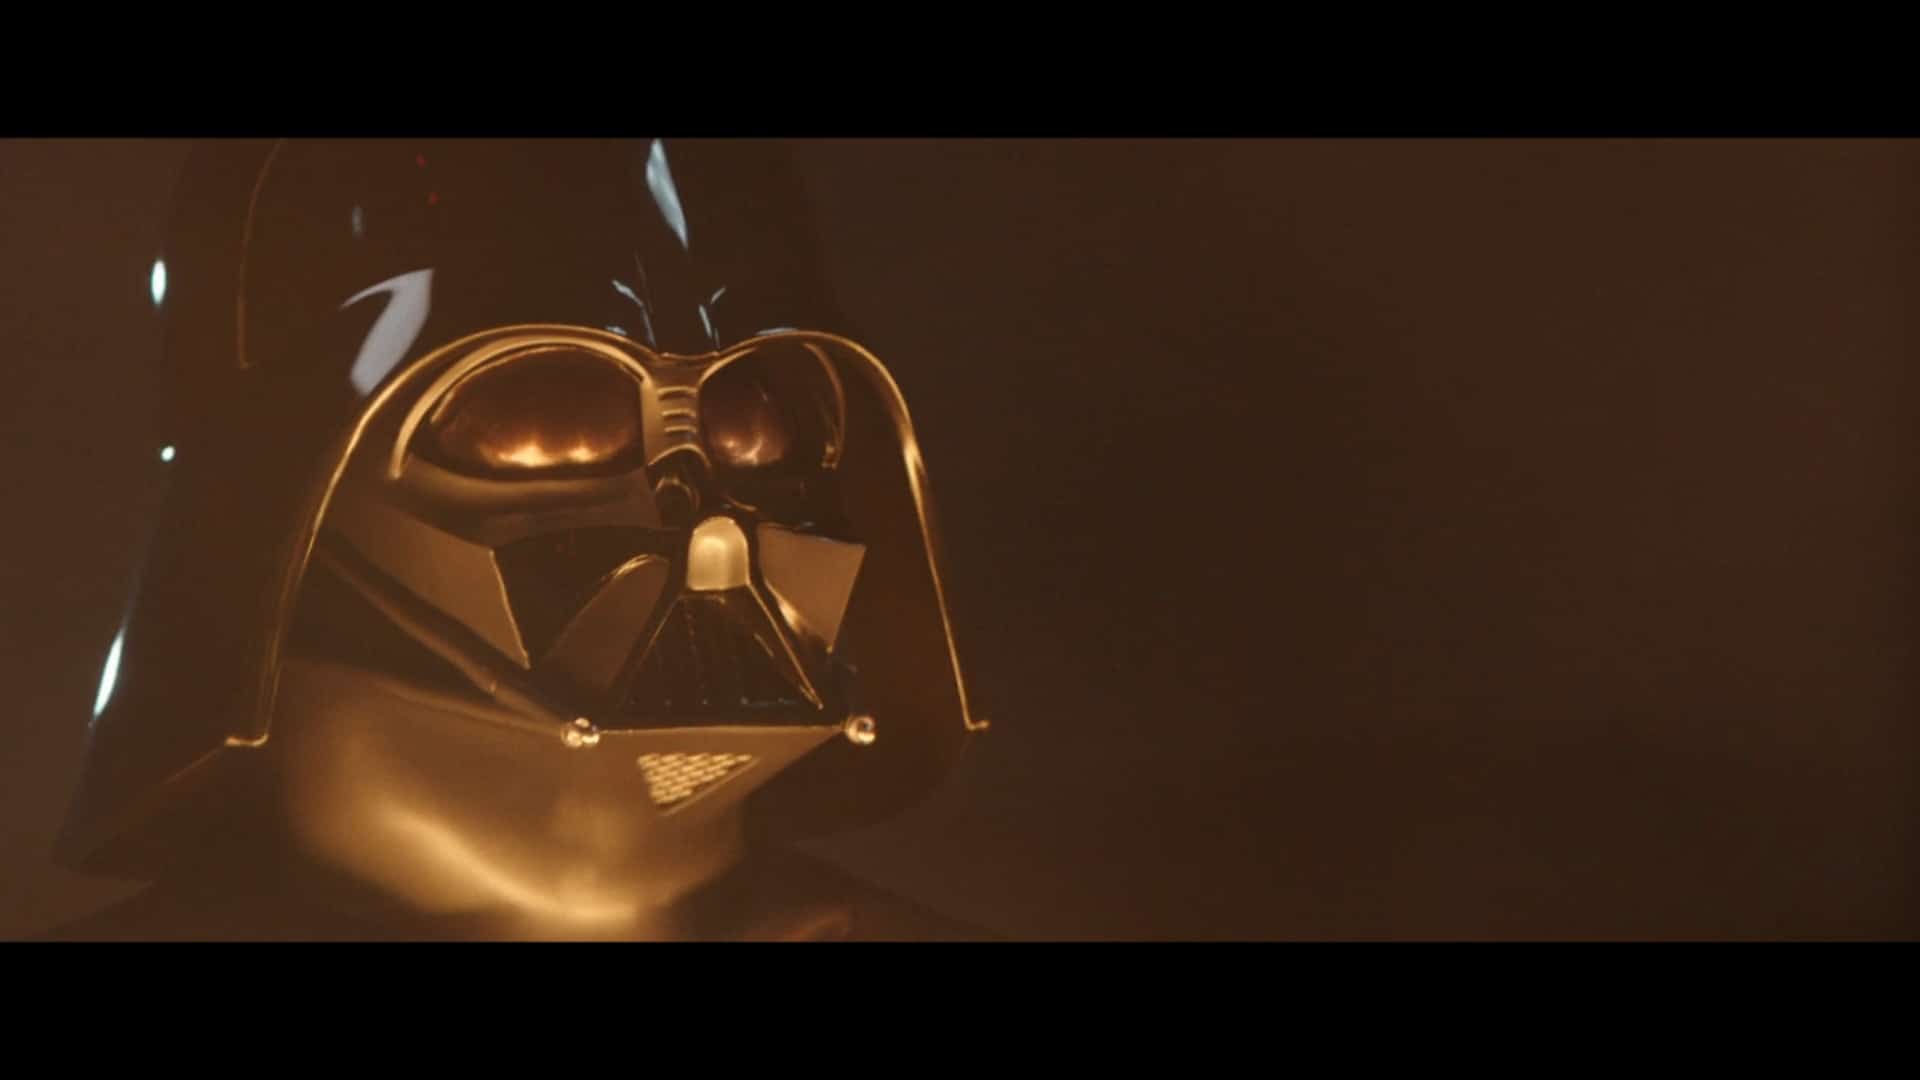 Darth Vader (James Earl Jones) lit up by fire